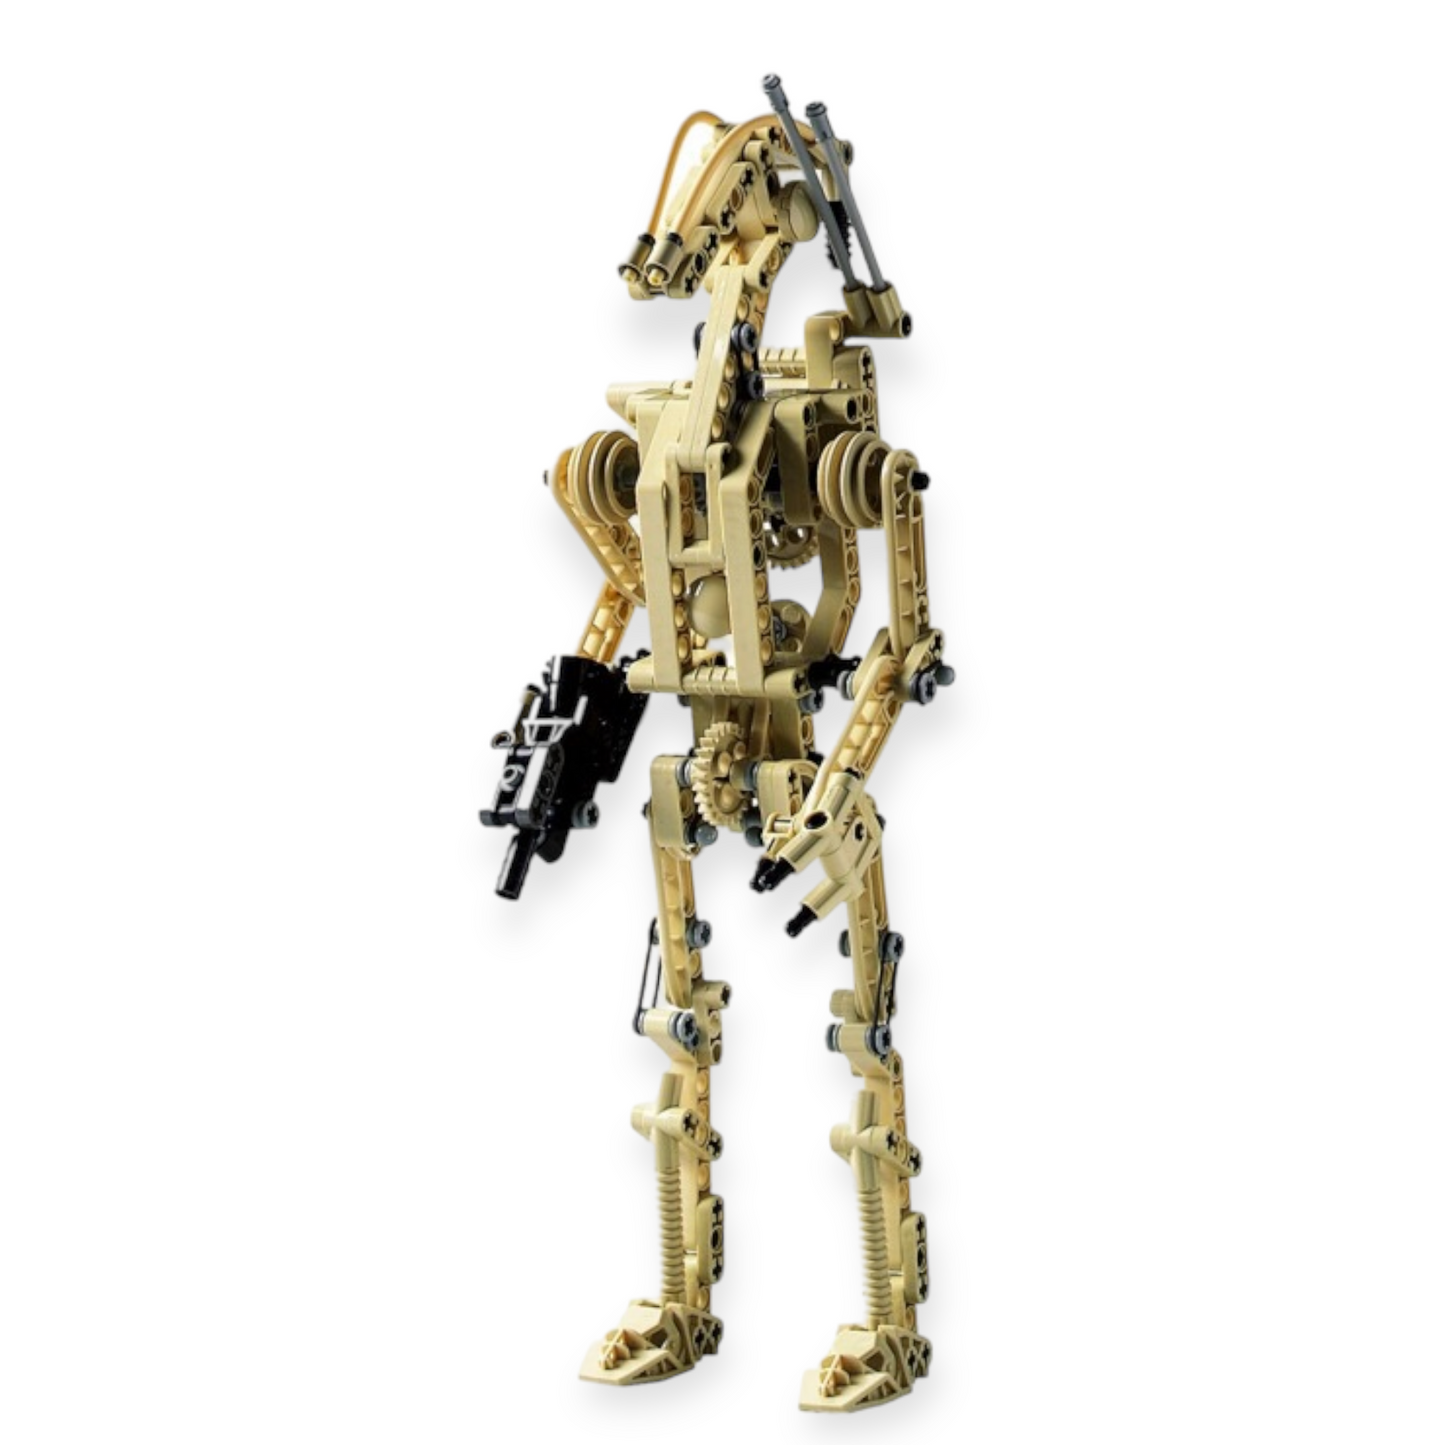 LEGO Technic Star Wars 8001 Battle Droid